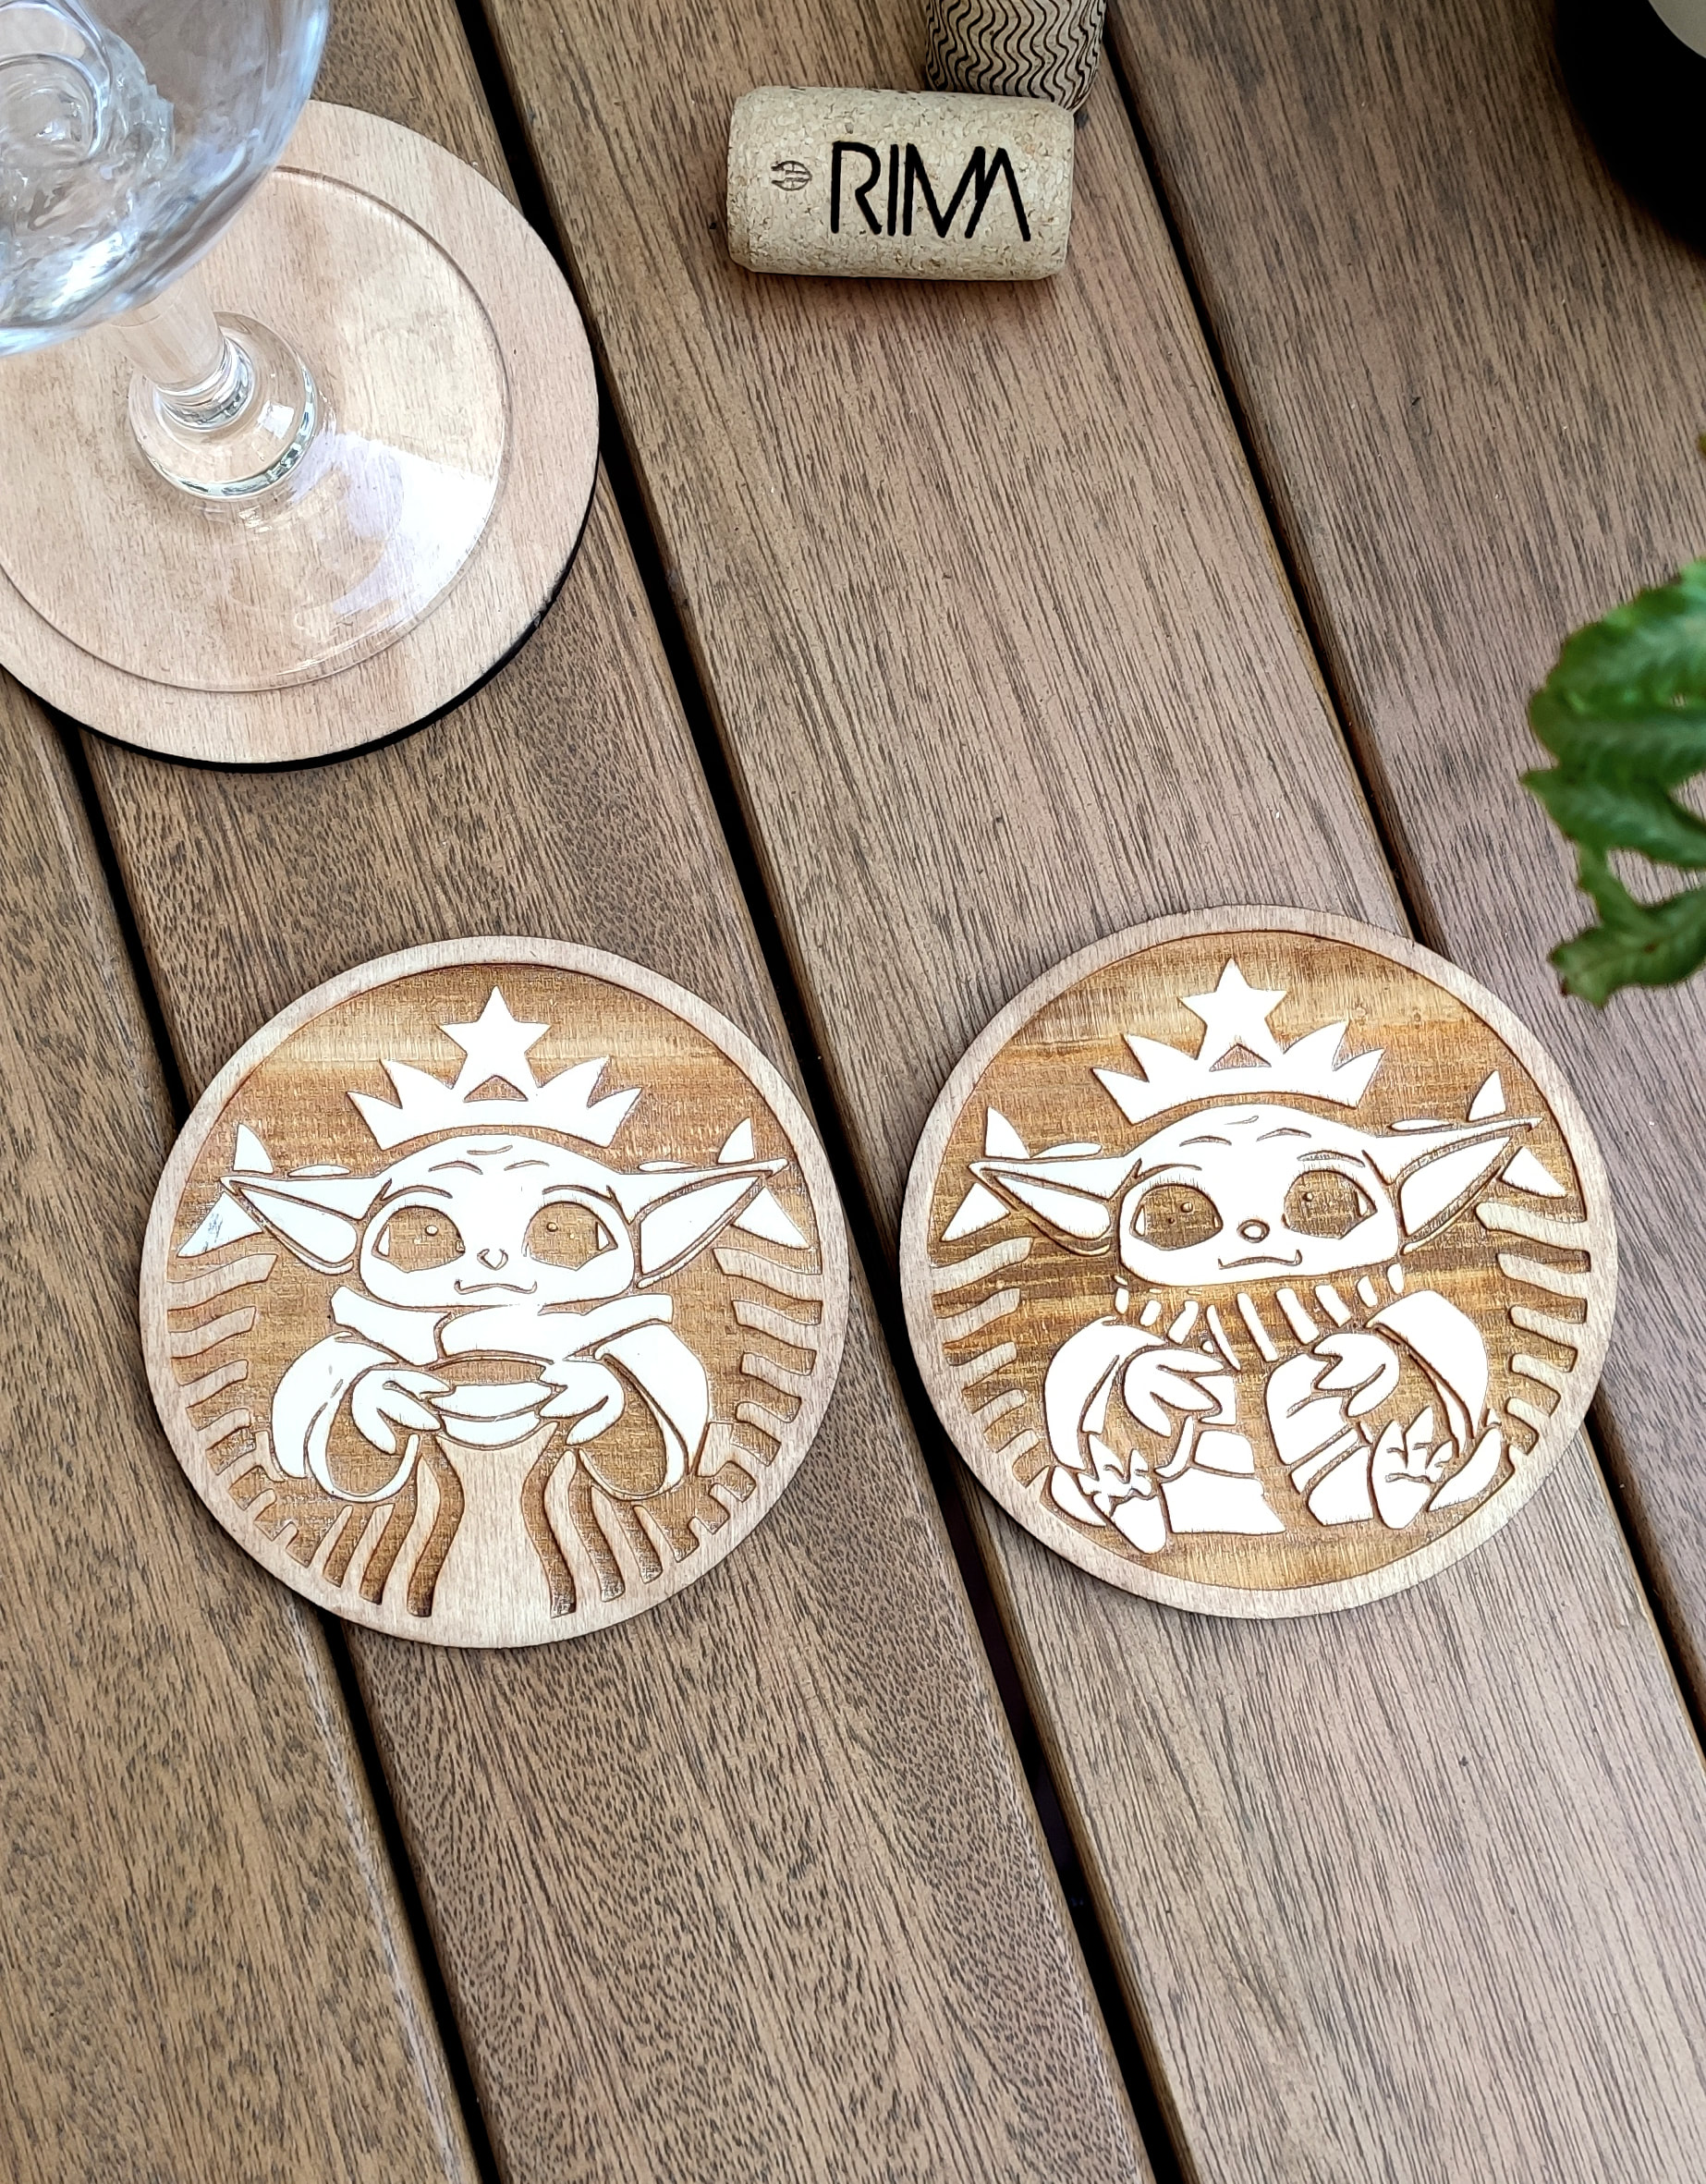 Wooden Star Wars Coasters »